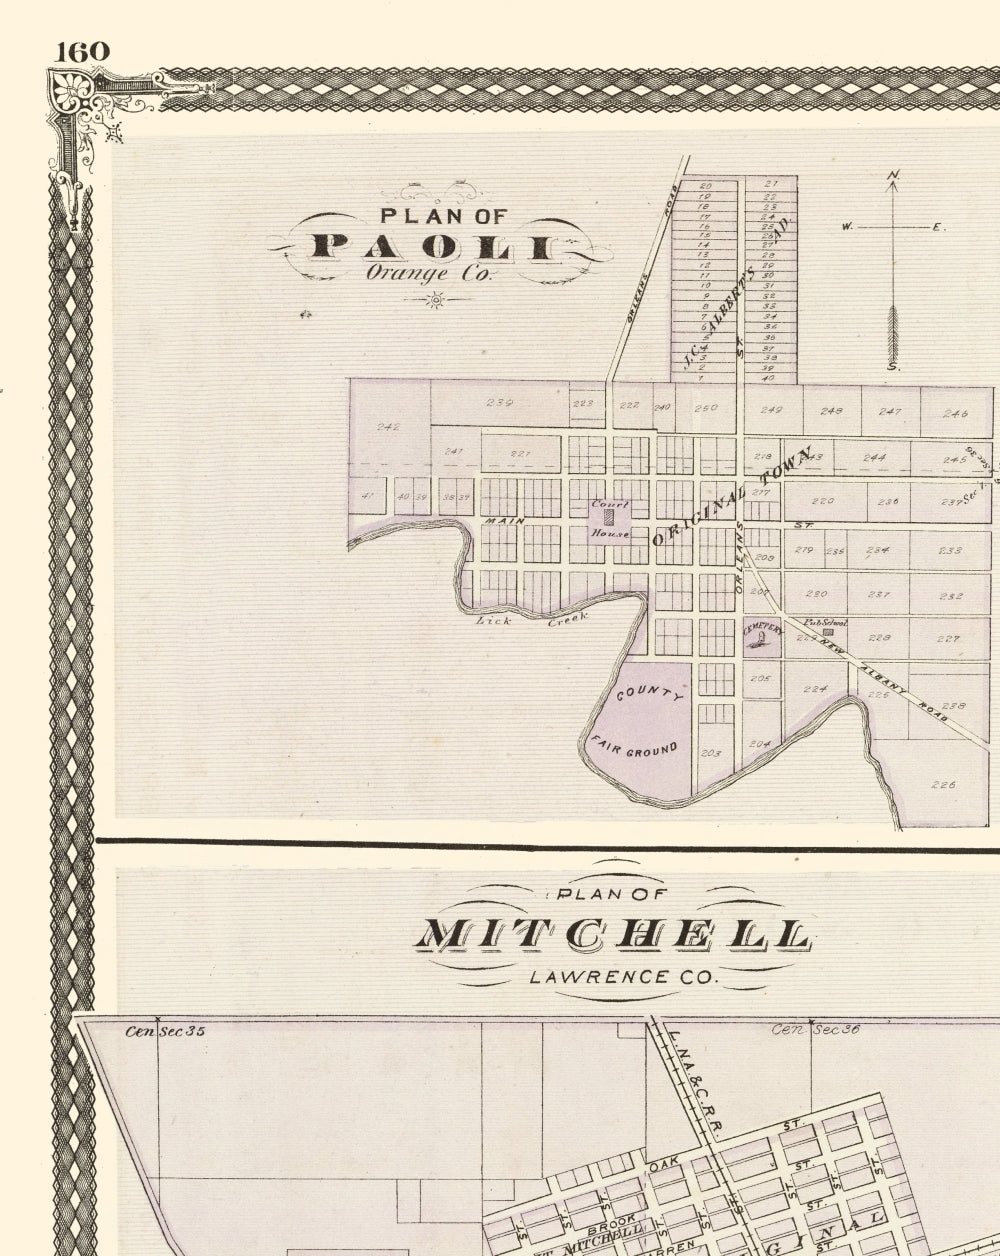 Historic City Map - Washington Paoli Orleans Bedford Mitchell Indiana - Baskin 1876 - 23x28 - Vintage Wall Art